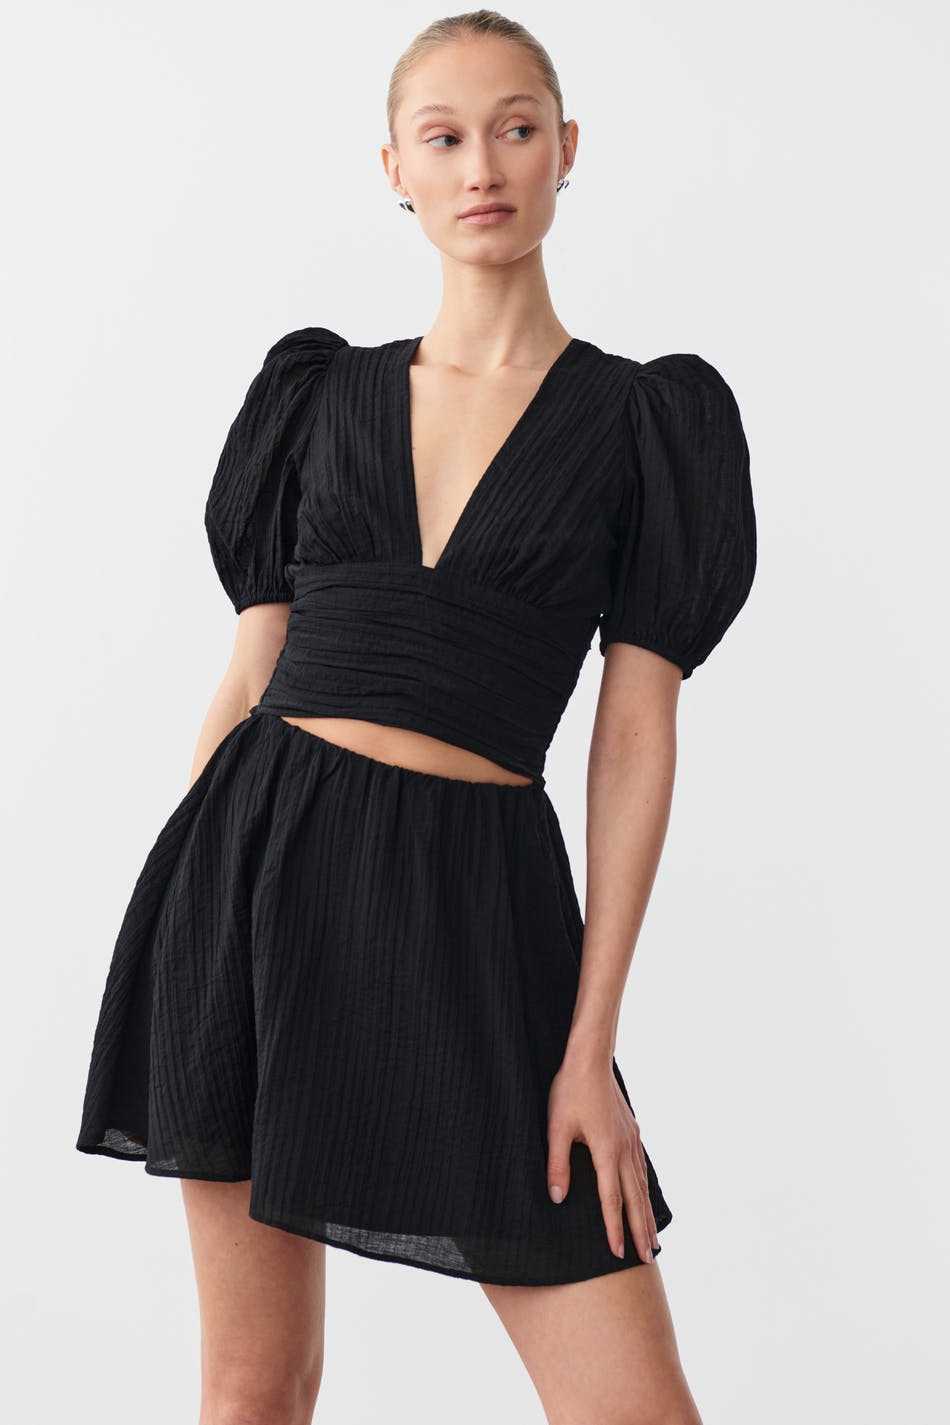 Gina Tricot - Short skirt - kjolar - Black - XL - Female